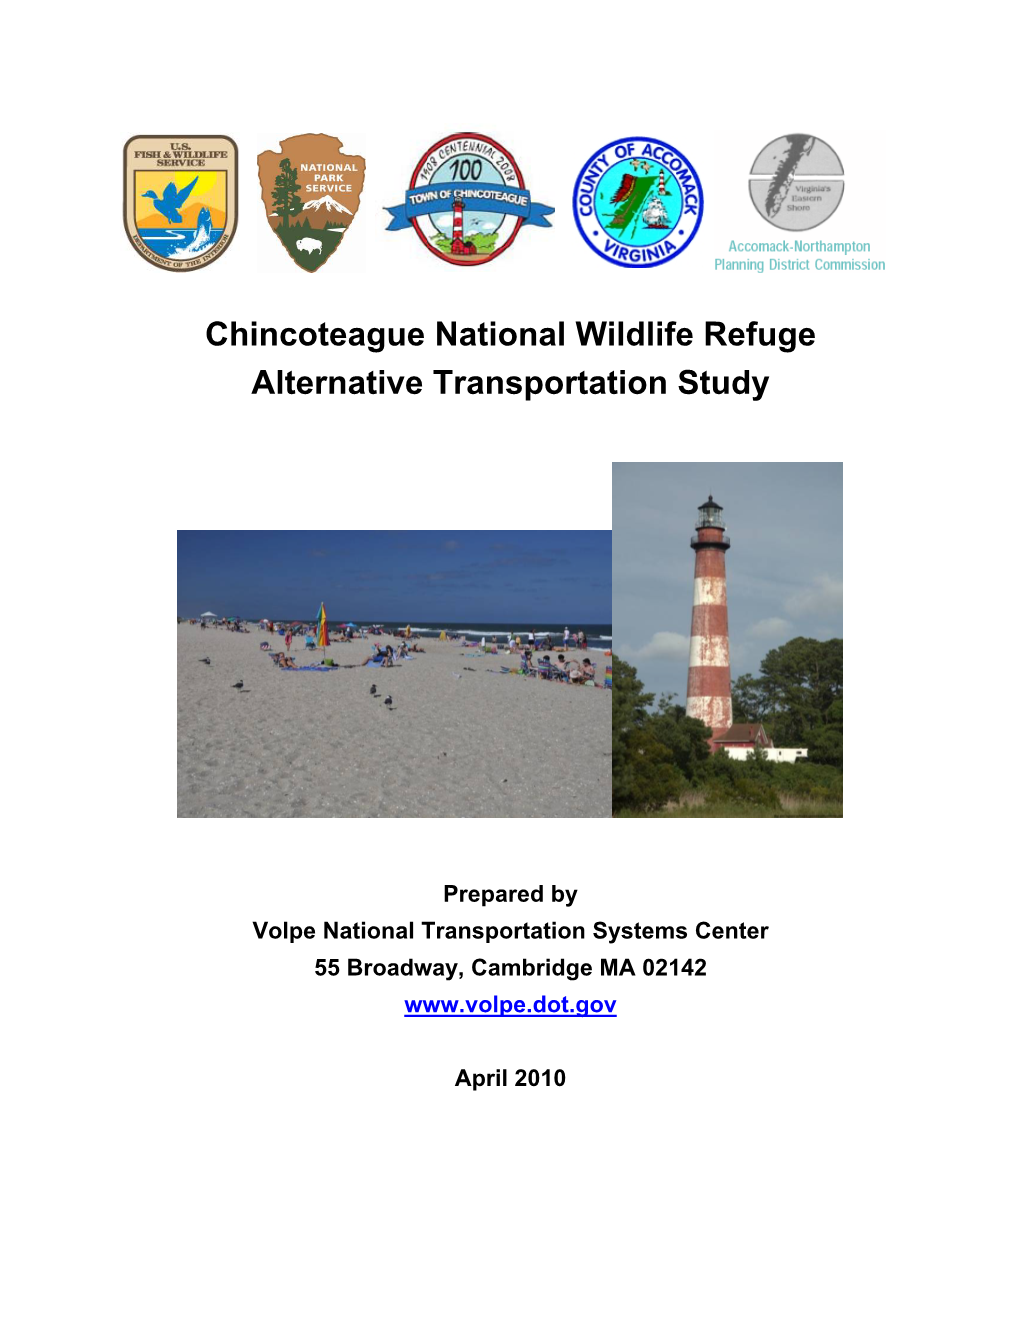 Chincoteague National Wildlife Refuge Alternative Transportation Study